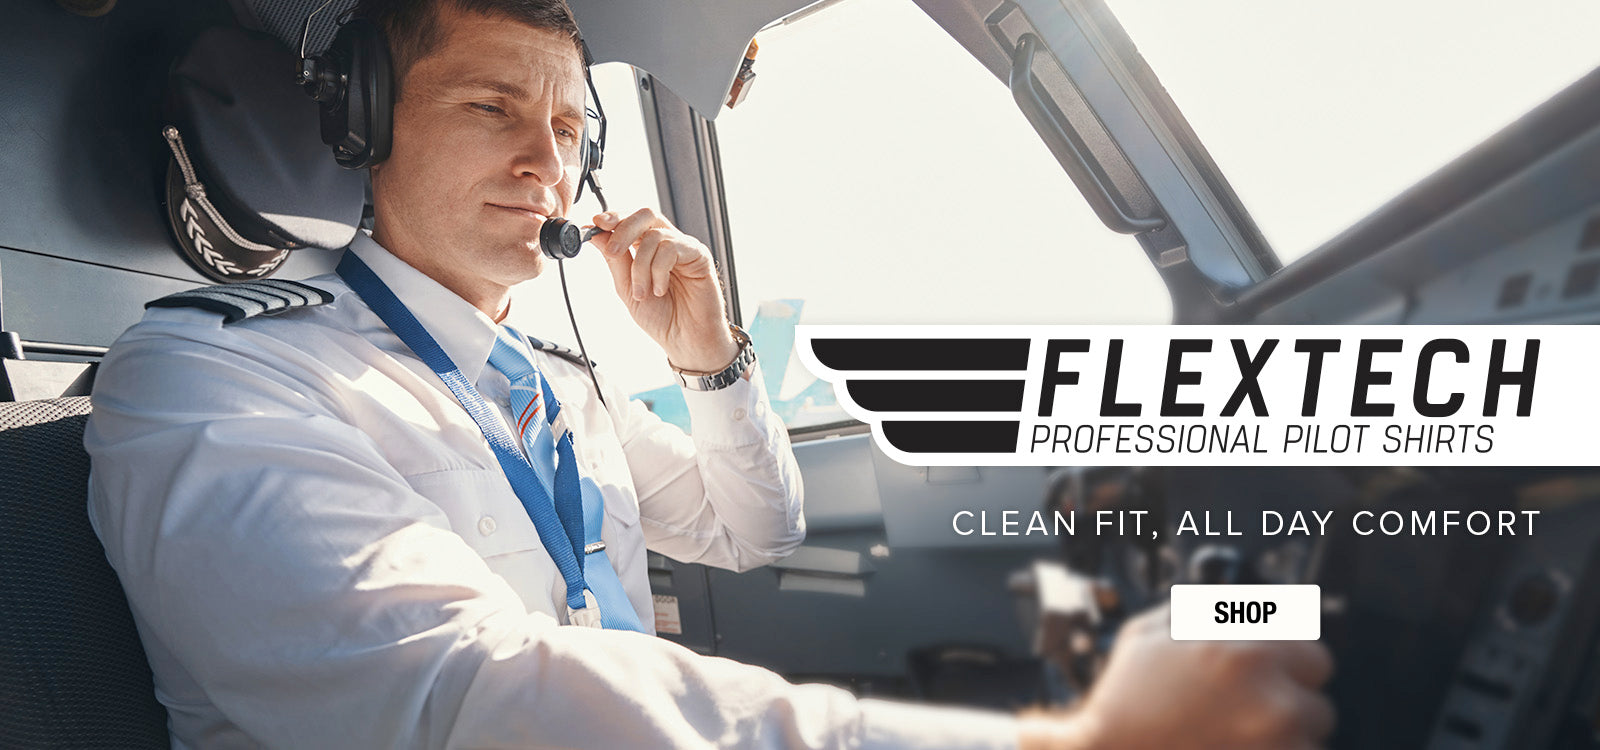 Flextech Professional Pilot Shirts